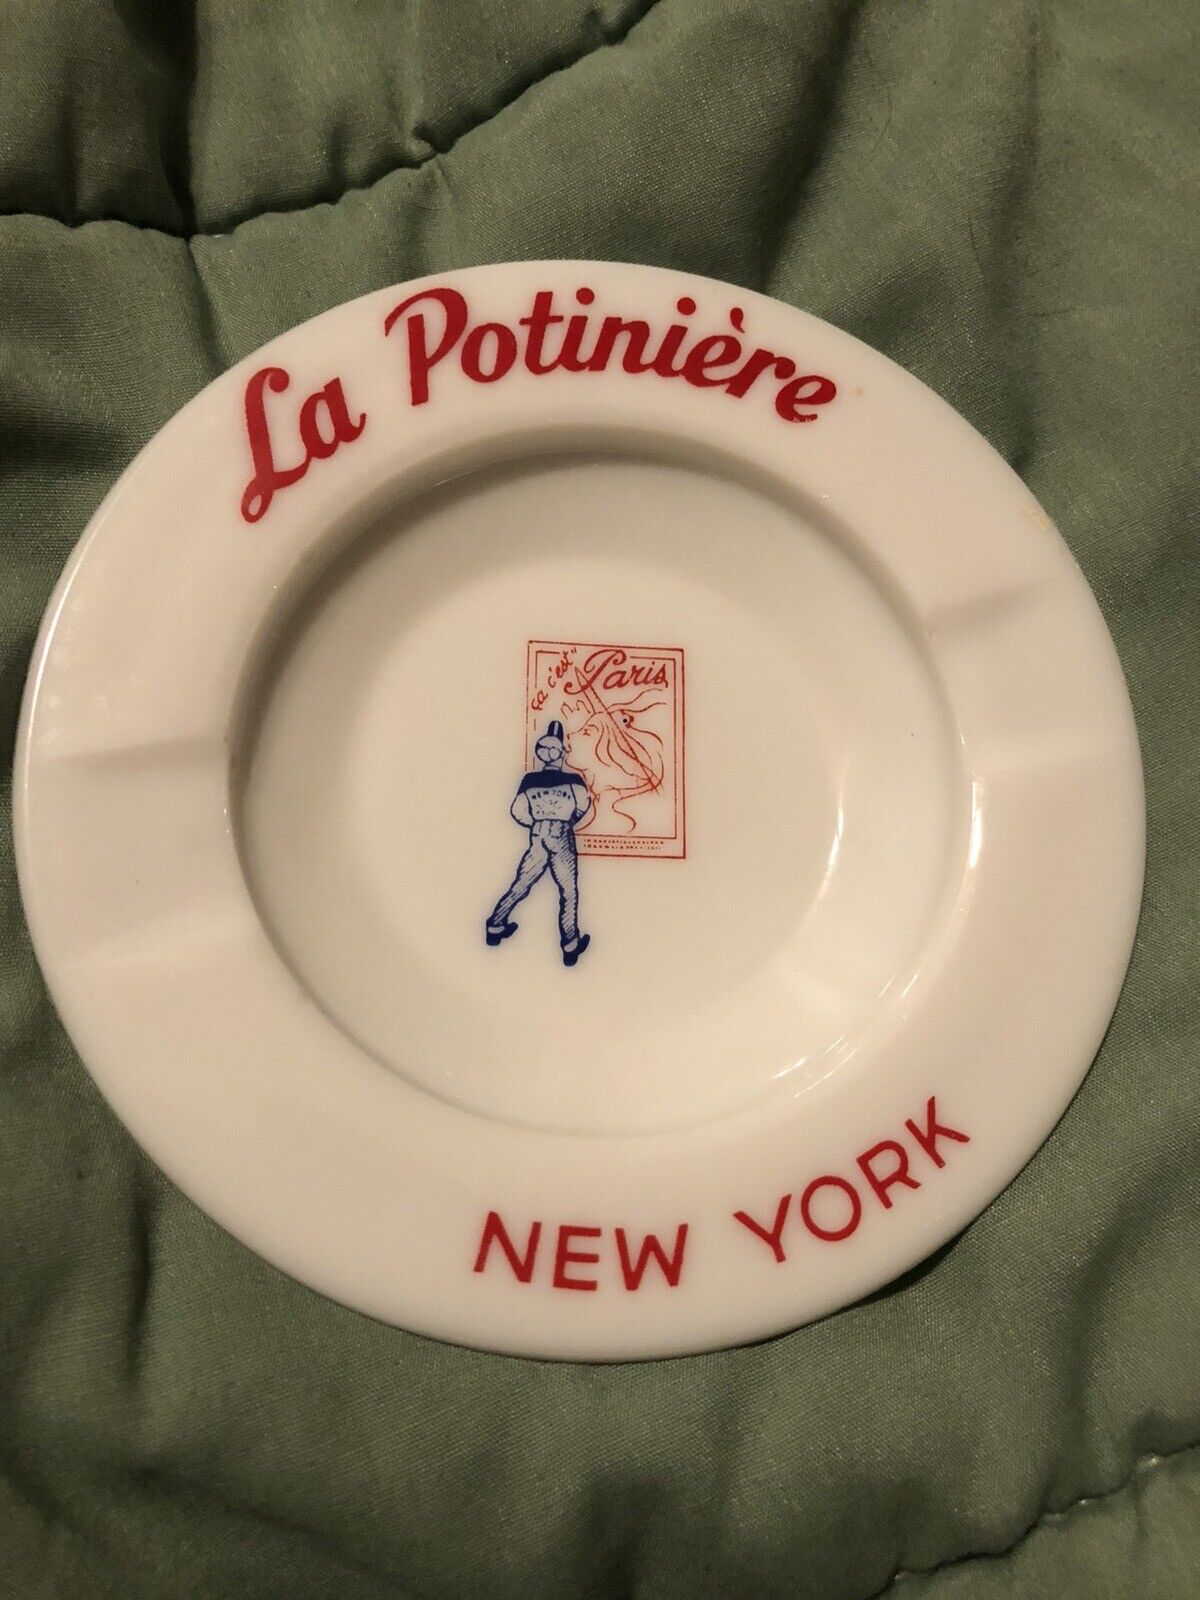 LA POTINIERE RESTAURANT NYC VINTAGE ROUND MILK GLASS ASHTRAY CIRCA 1959